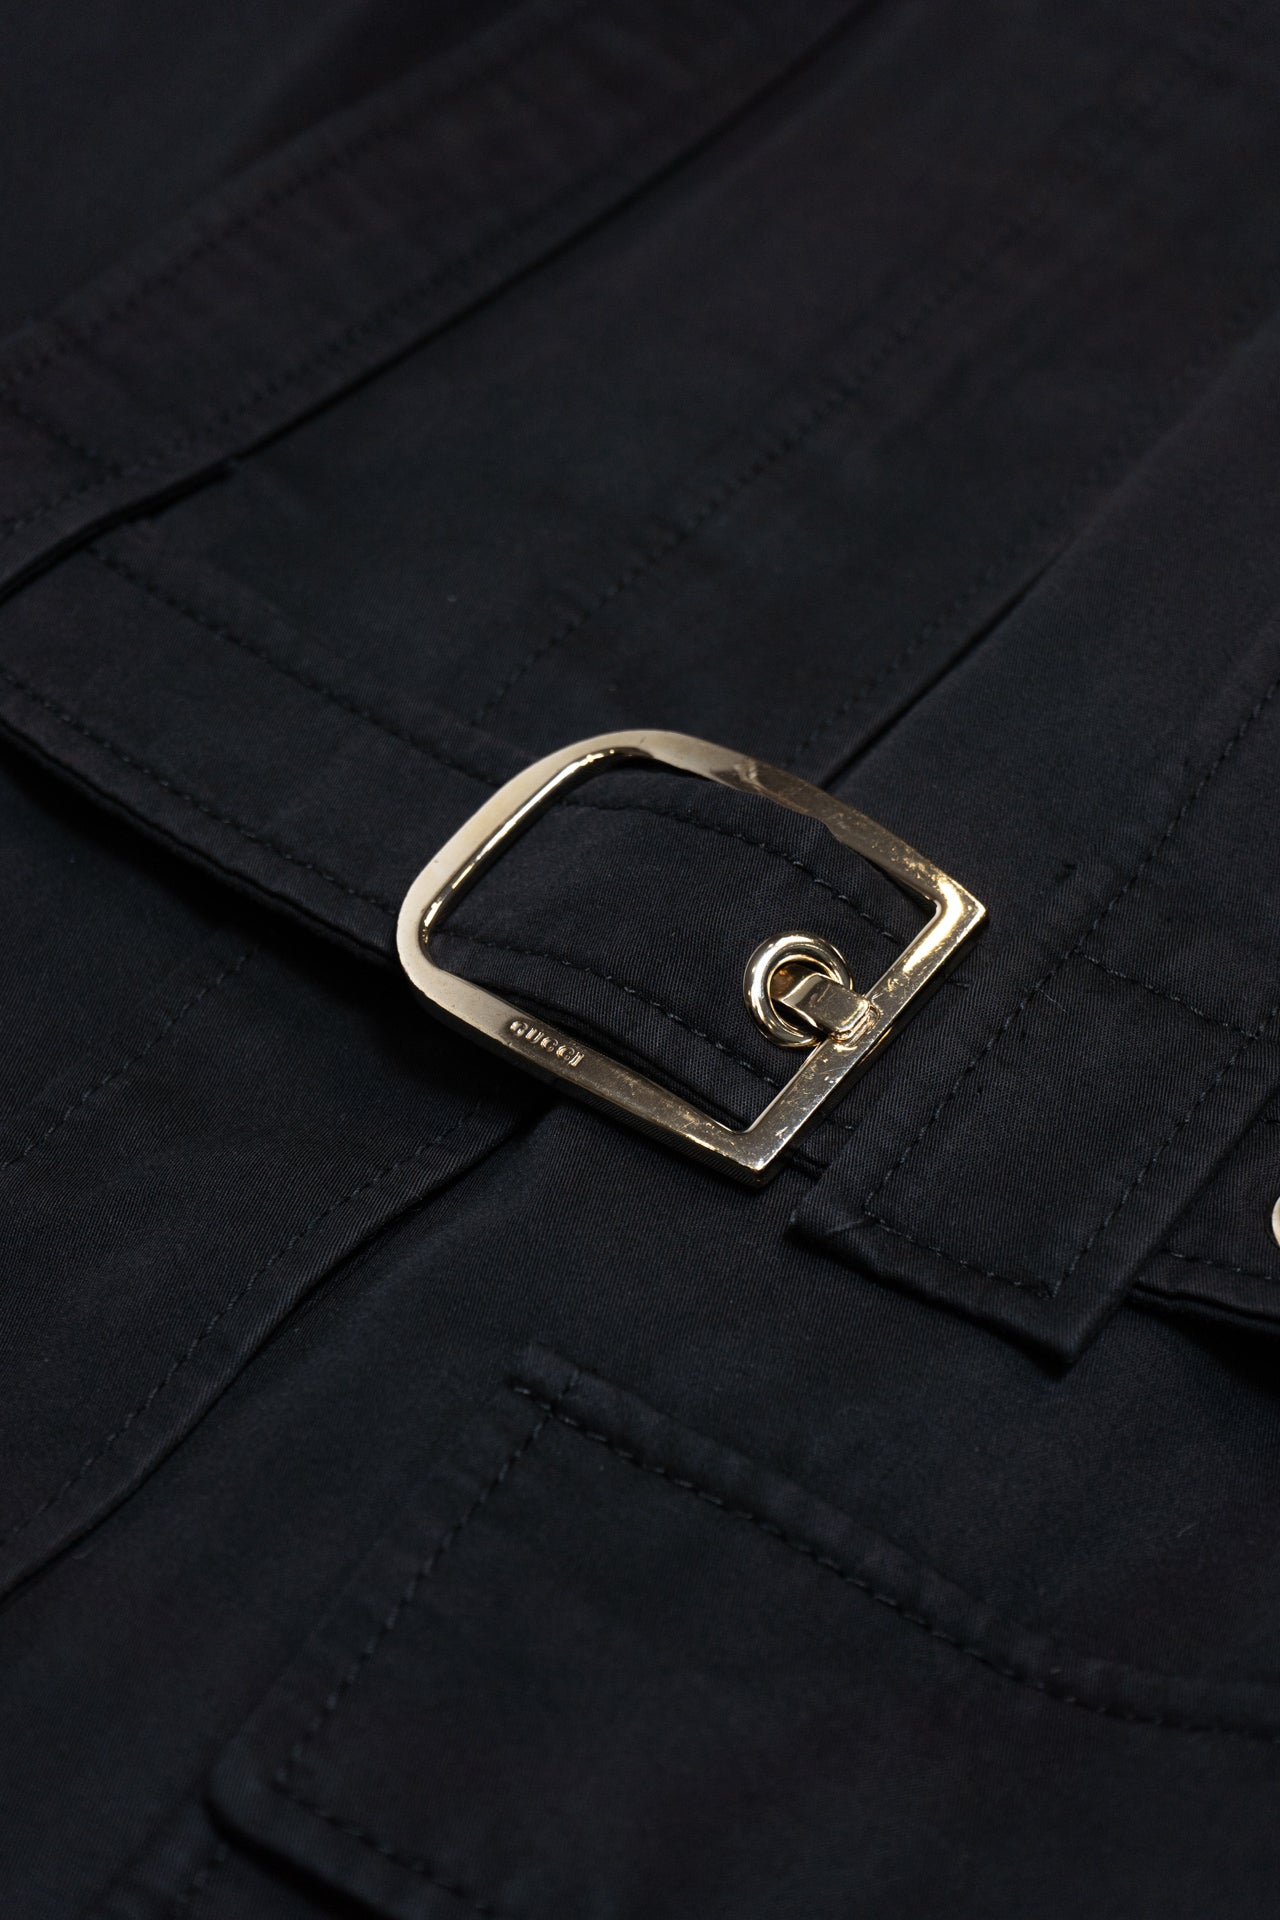 Gucci Black Long Coat With Belt